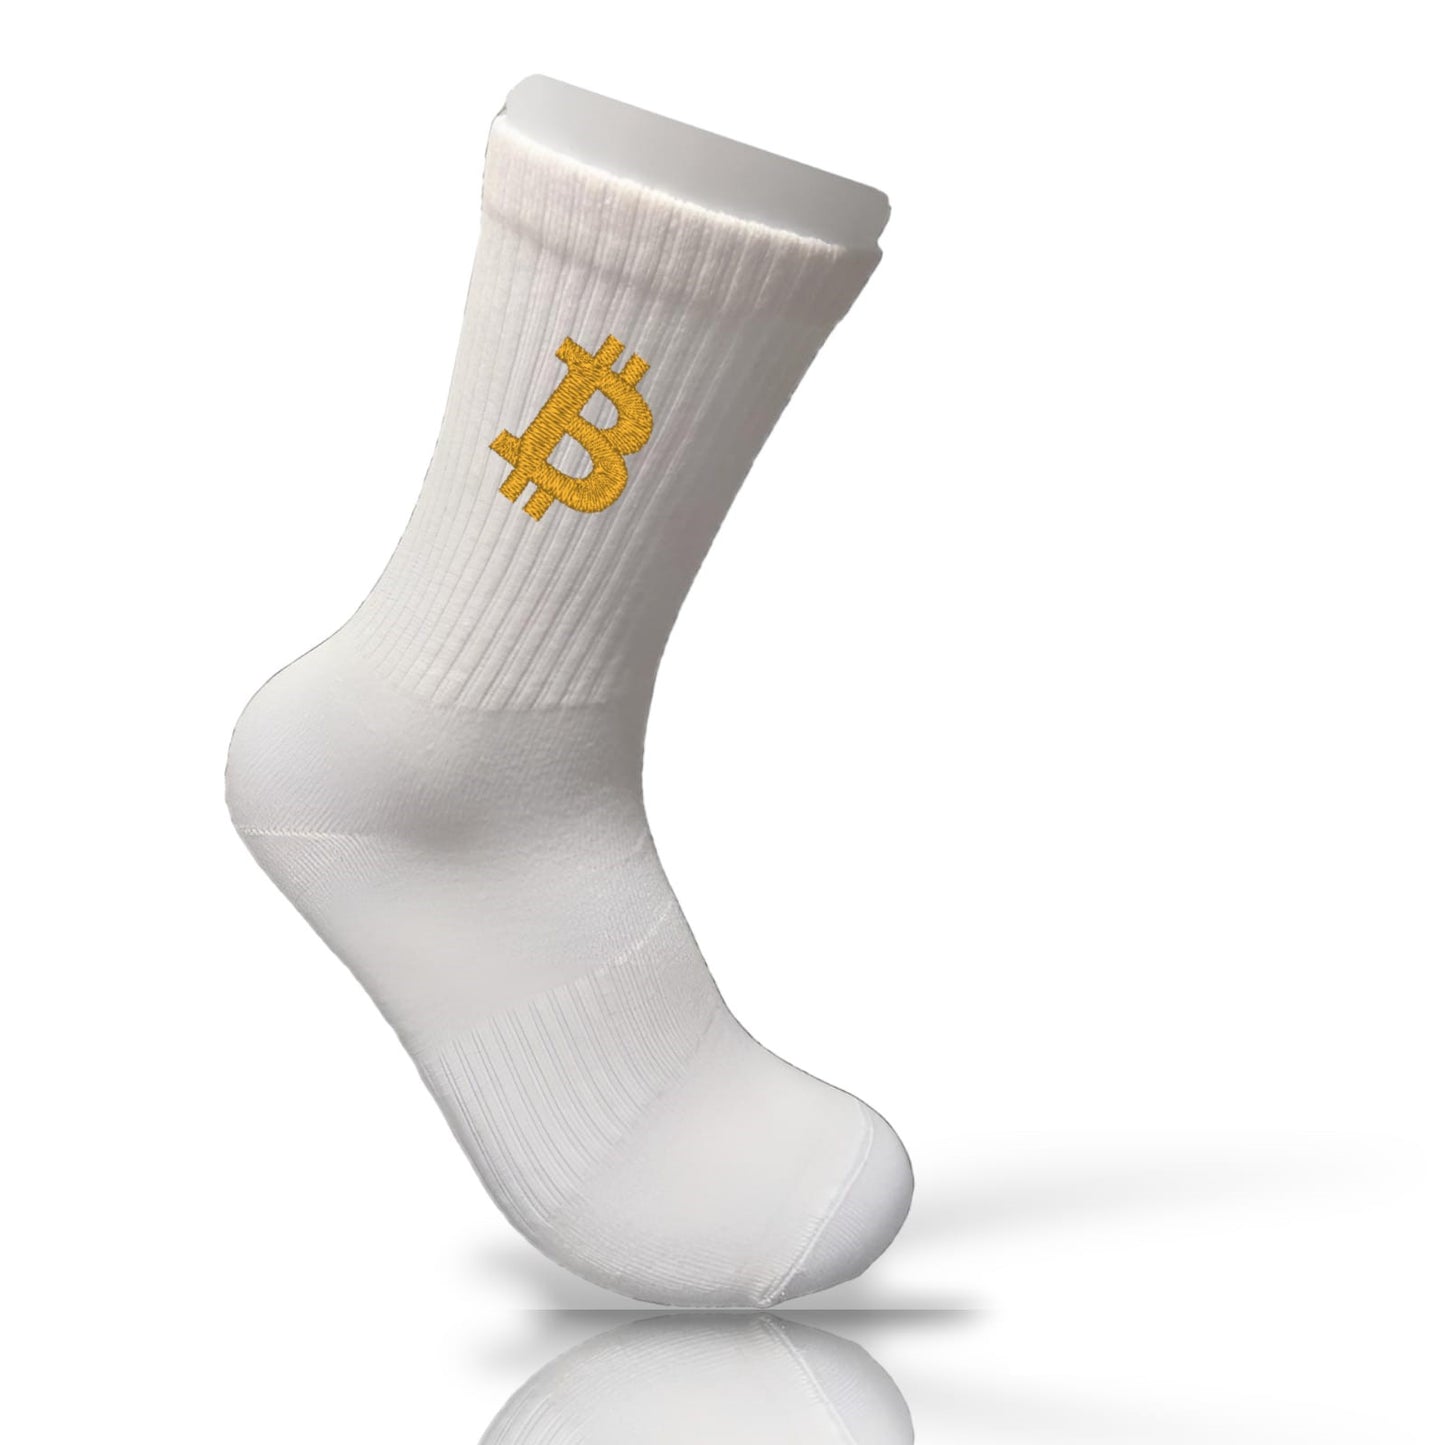 Bambus Sport-Socken mit Bitcoin-Logo und Wunschtext